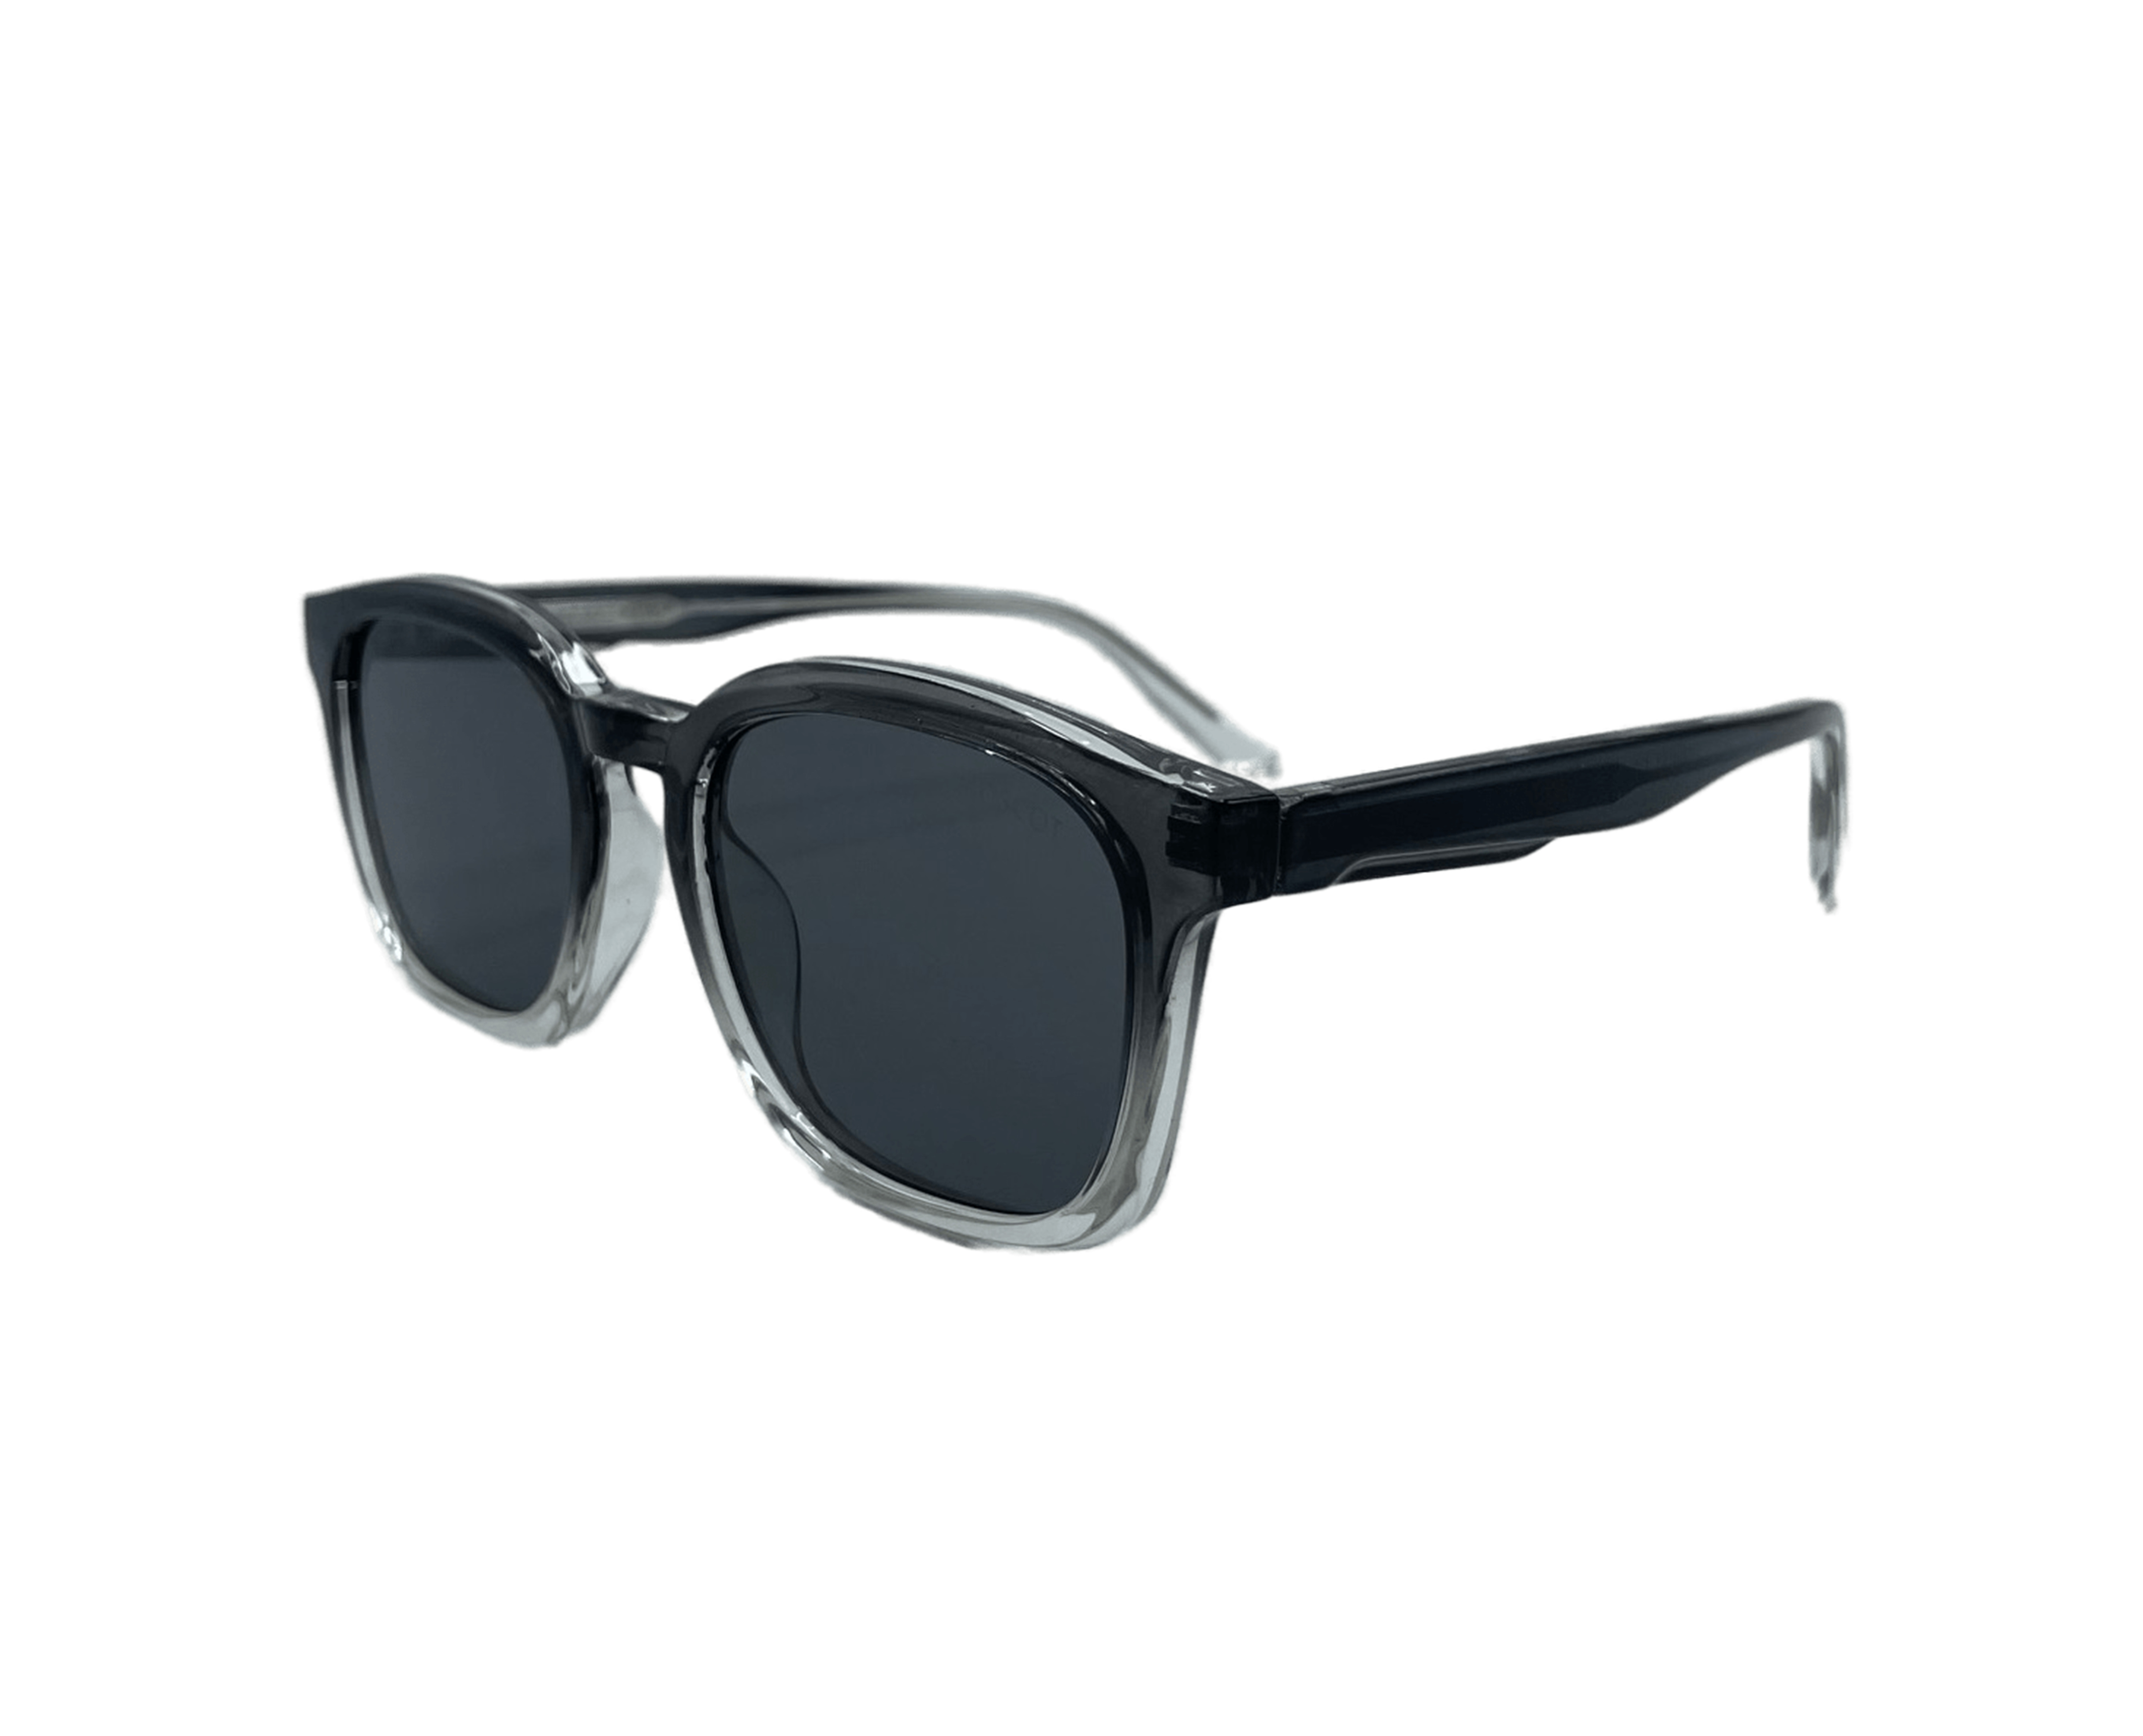 NS Deluxe - 8811 - Black - Sunglasses